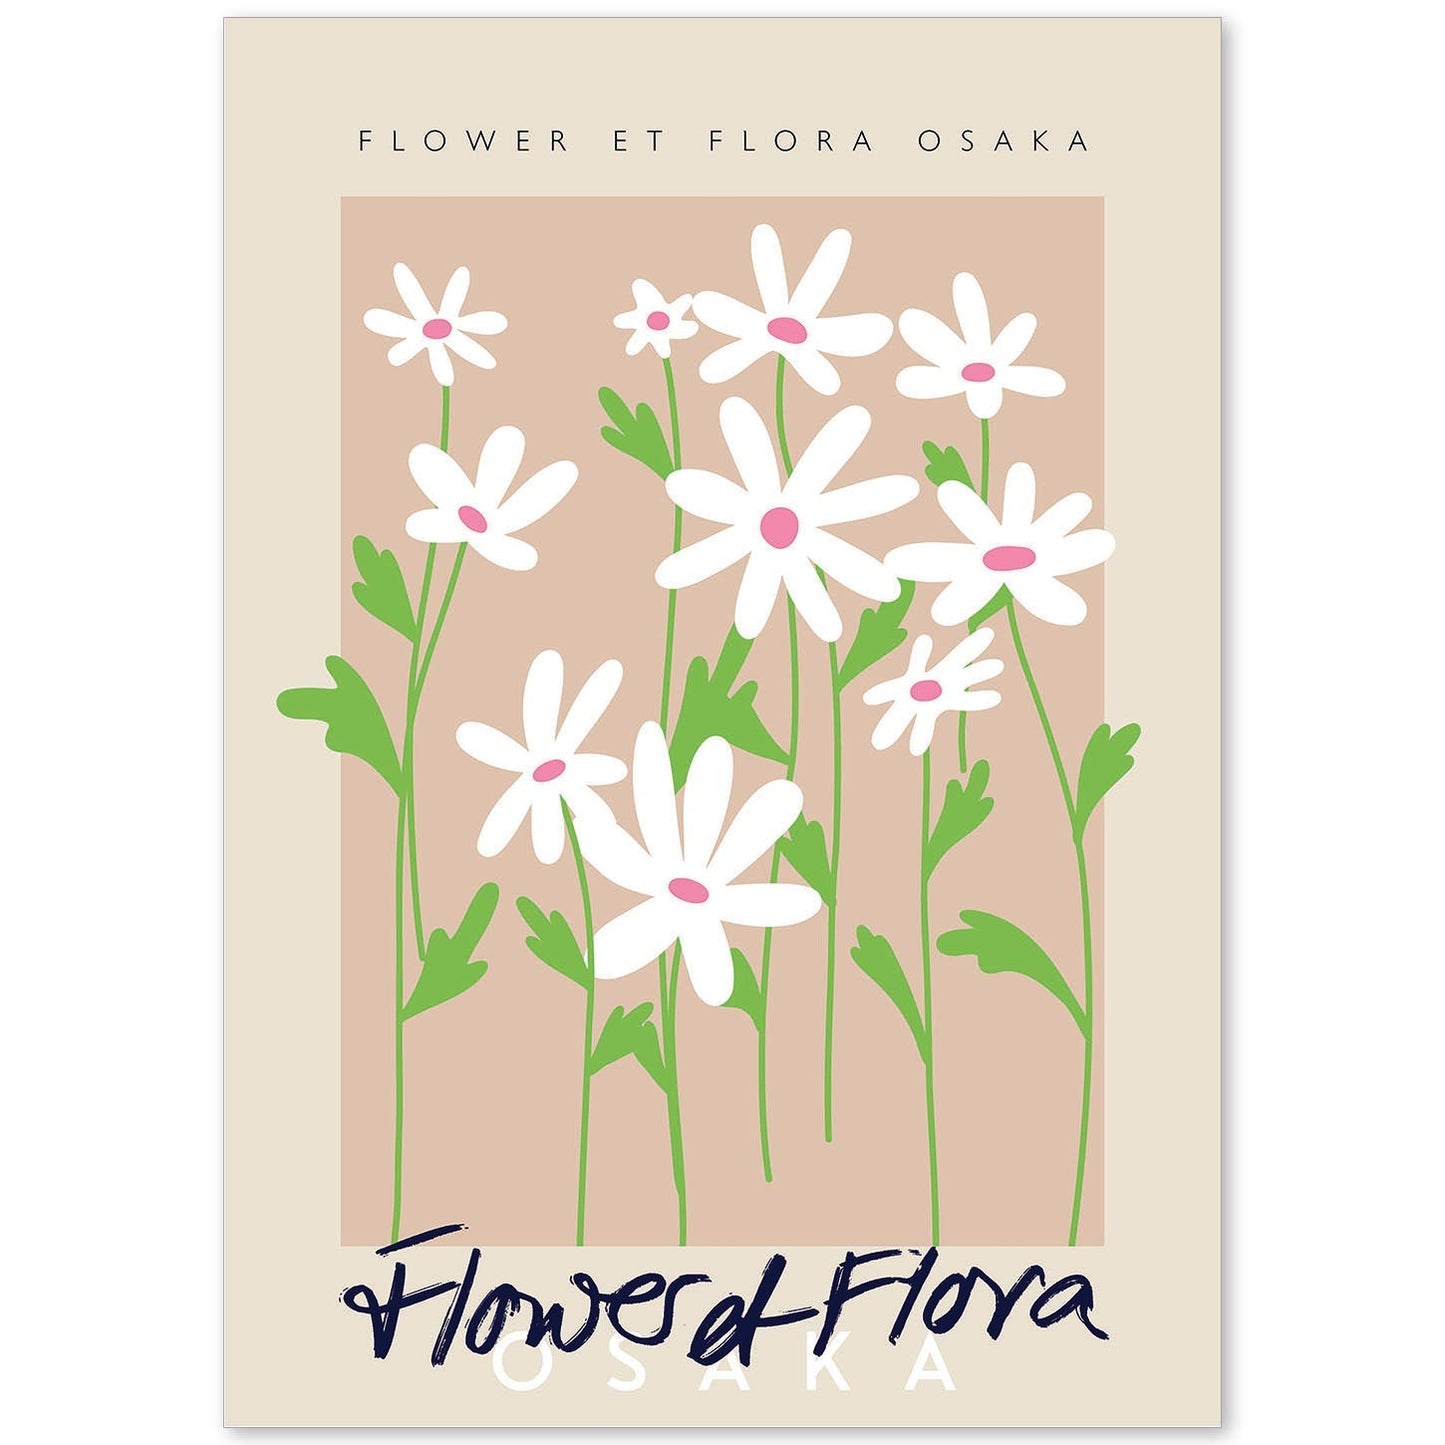 Lamina artistica decorativa con ilustración de Flower et flora osaka-Artwork-Nacnic-A4-Sin marco-Nacnic Estudio SL